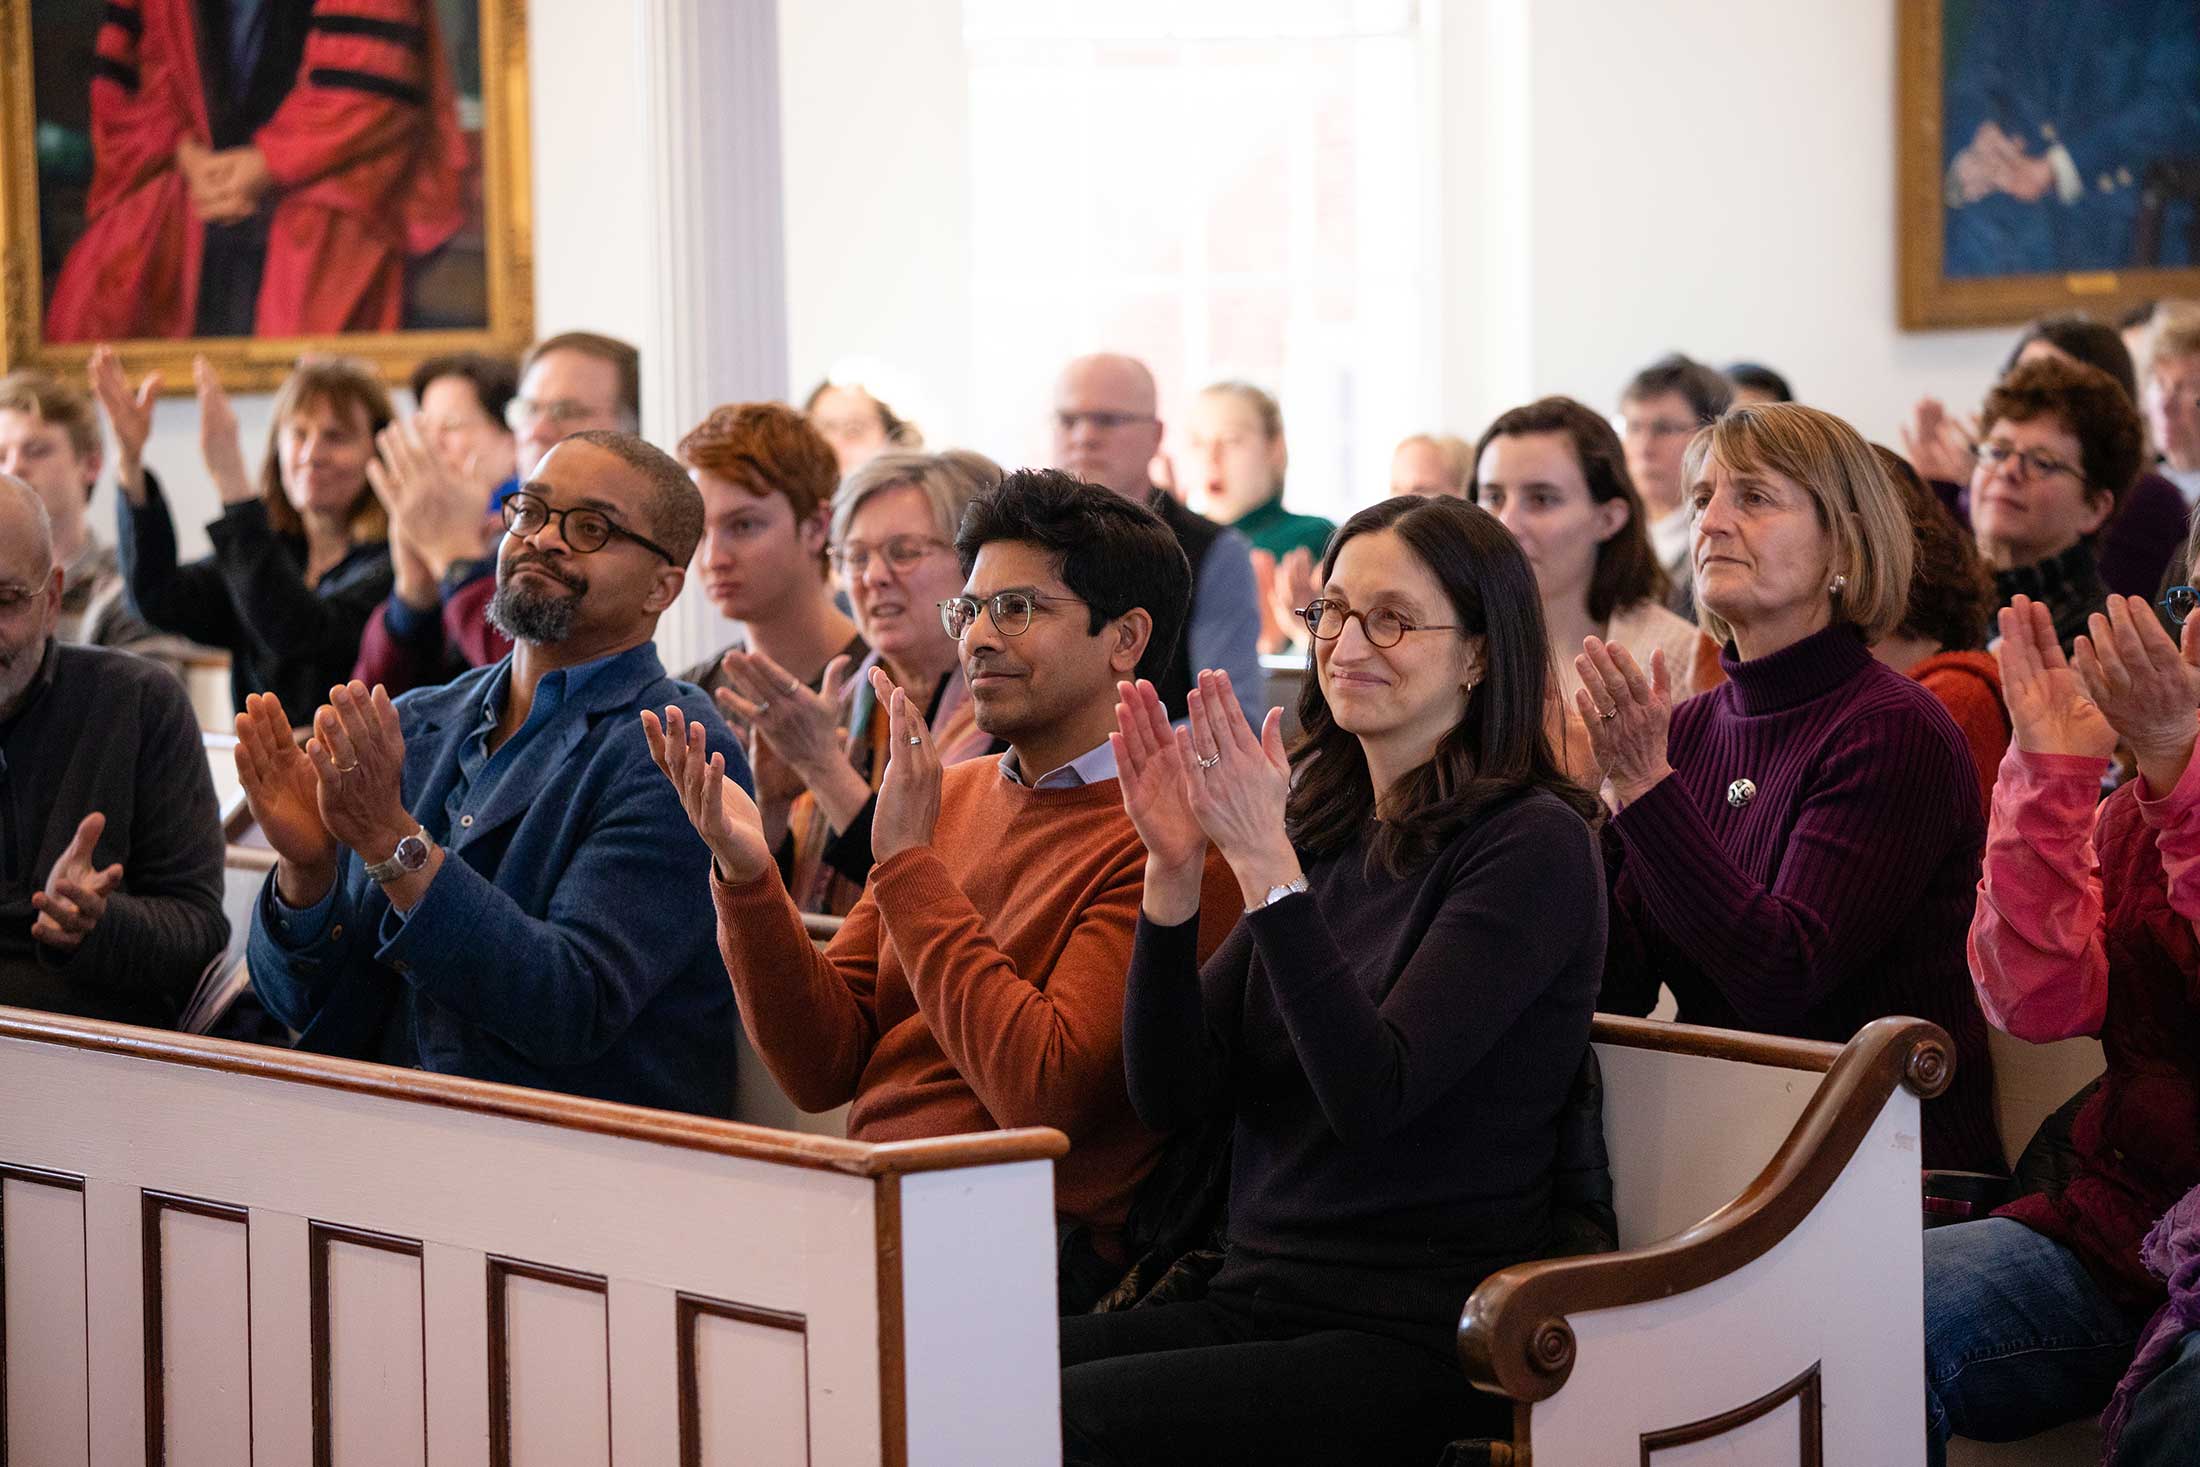 LitFest audience members in Johnson Chapel applauding